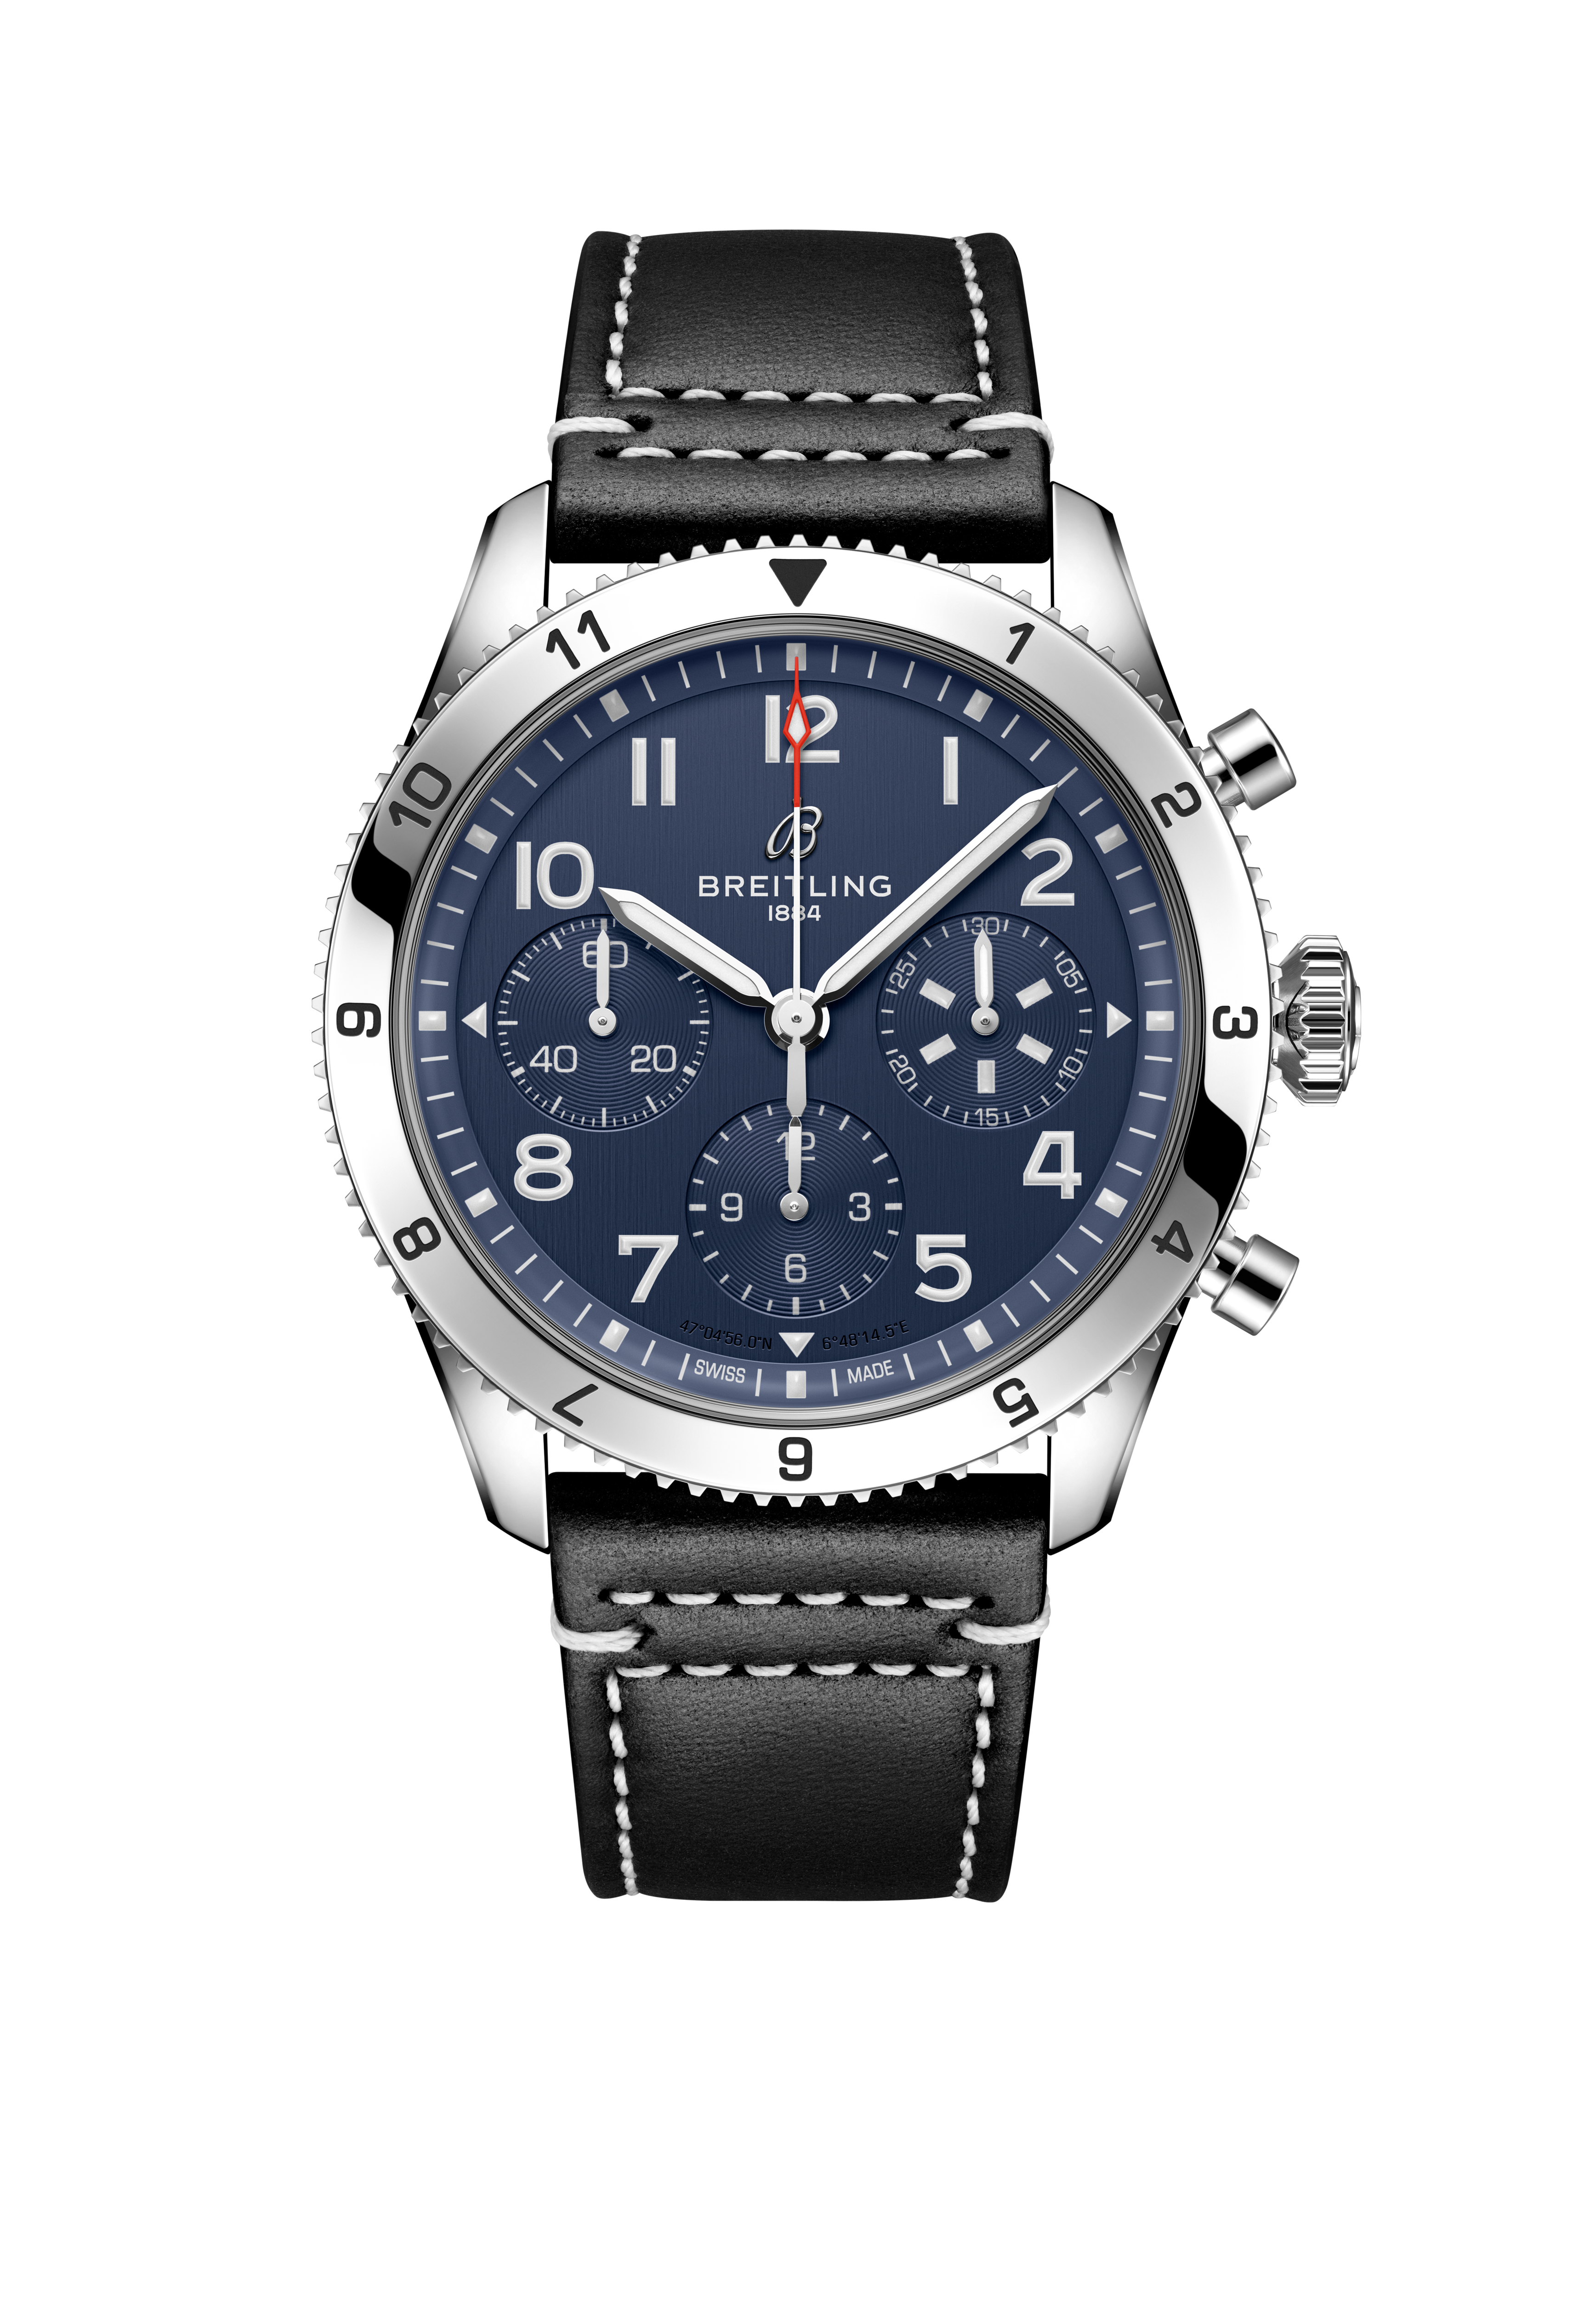 17 breitling classic avi chronograph 42 tribute to vought f4u corsair ref. A233801a1c1x1 rgb